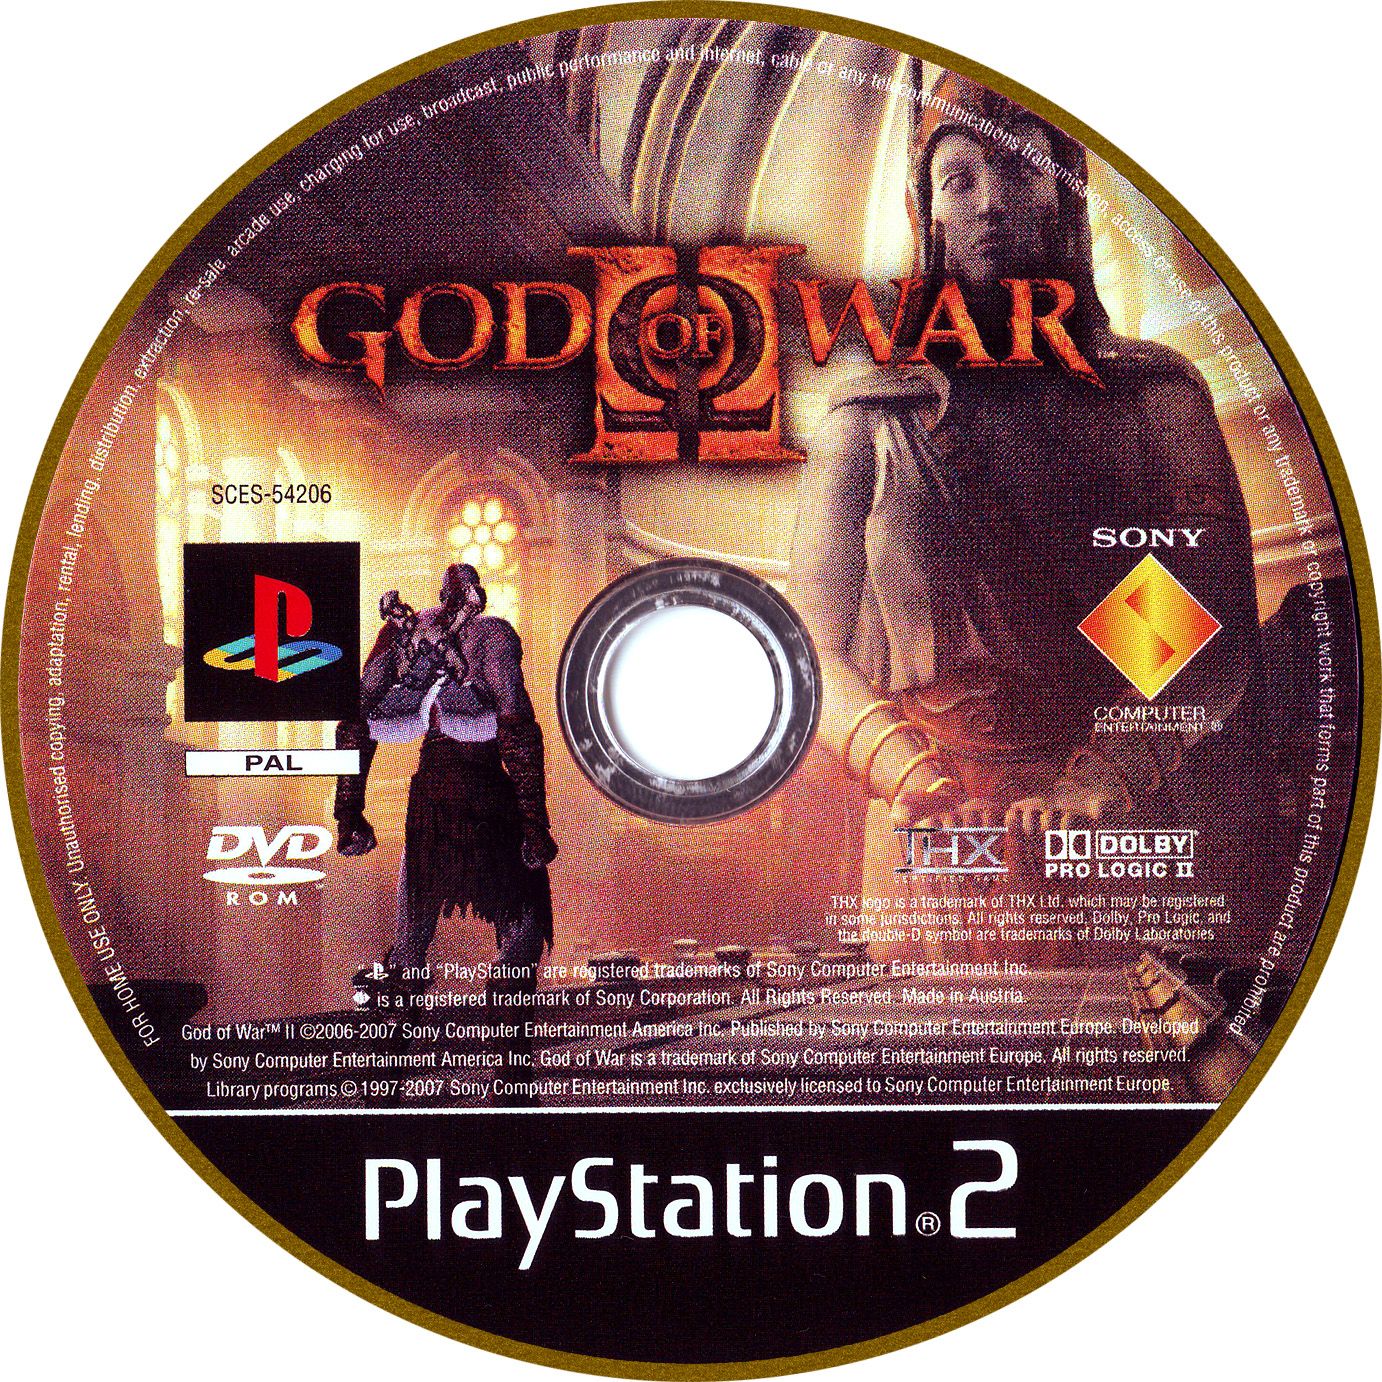 god of war 3 ps2 download free